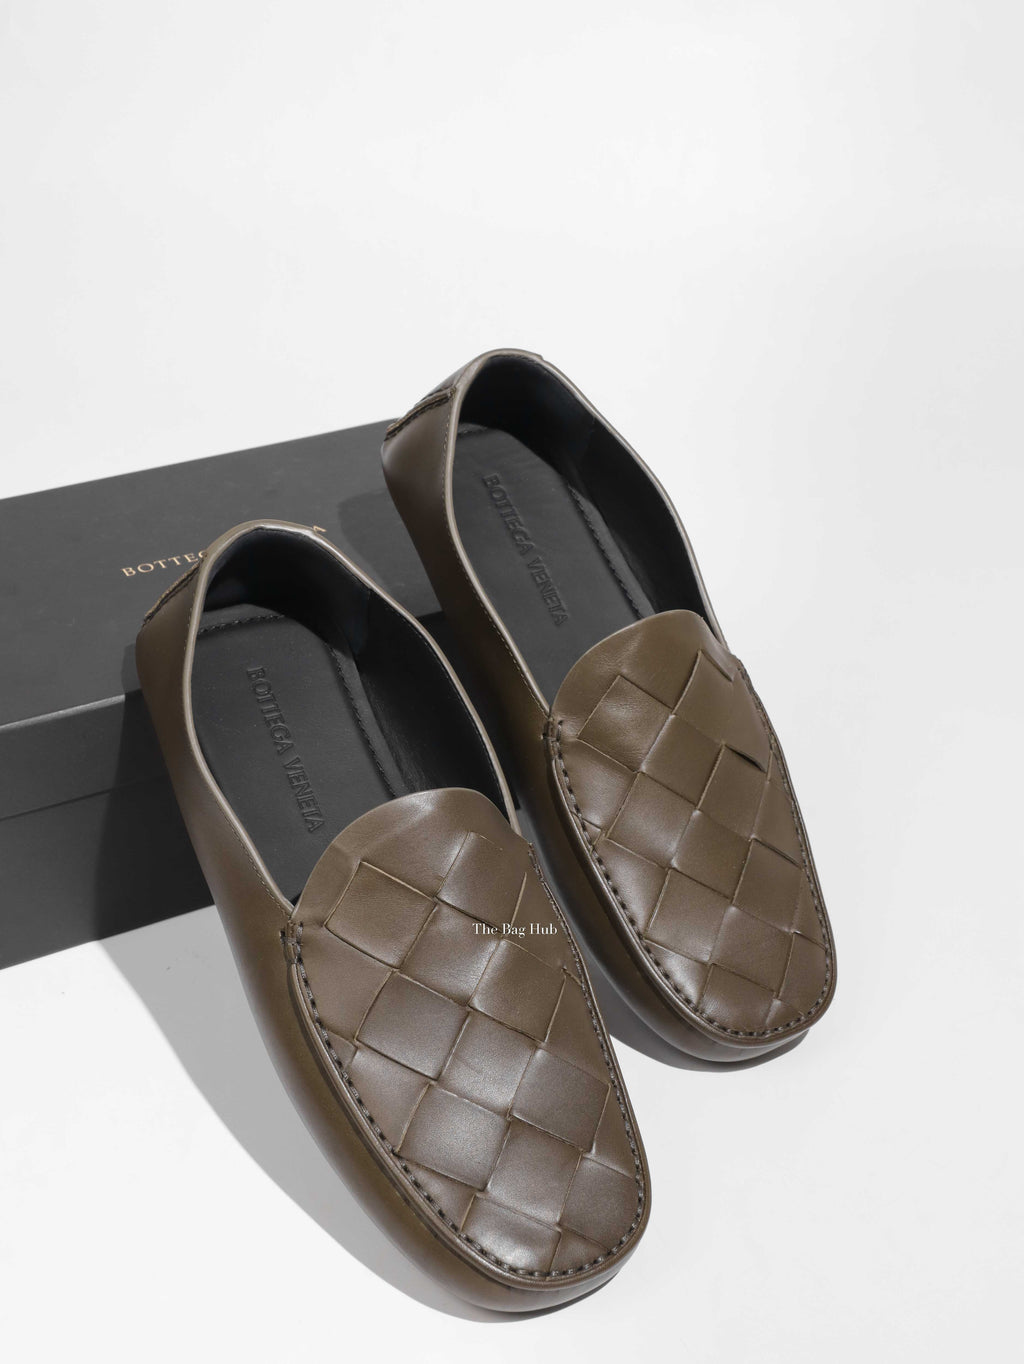 Bottega Veneta Olive Leather Men's Driving Loafers Size 42.5-1